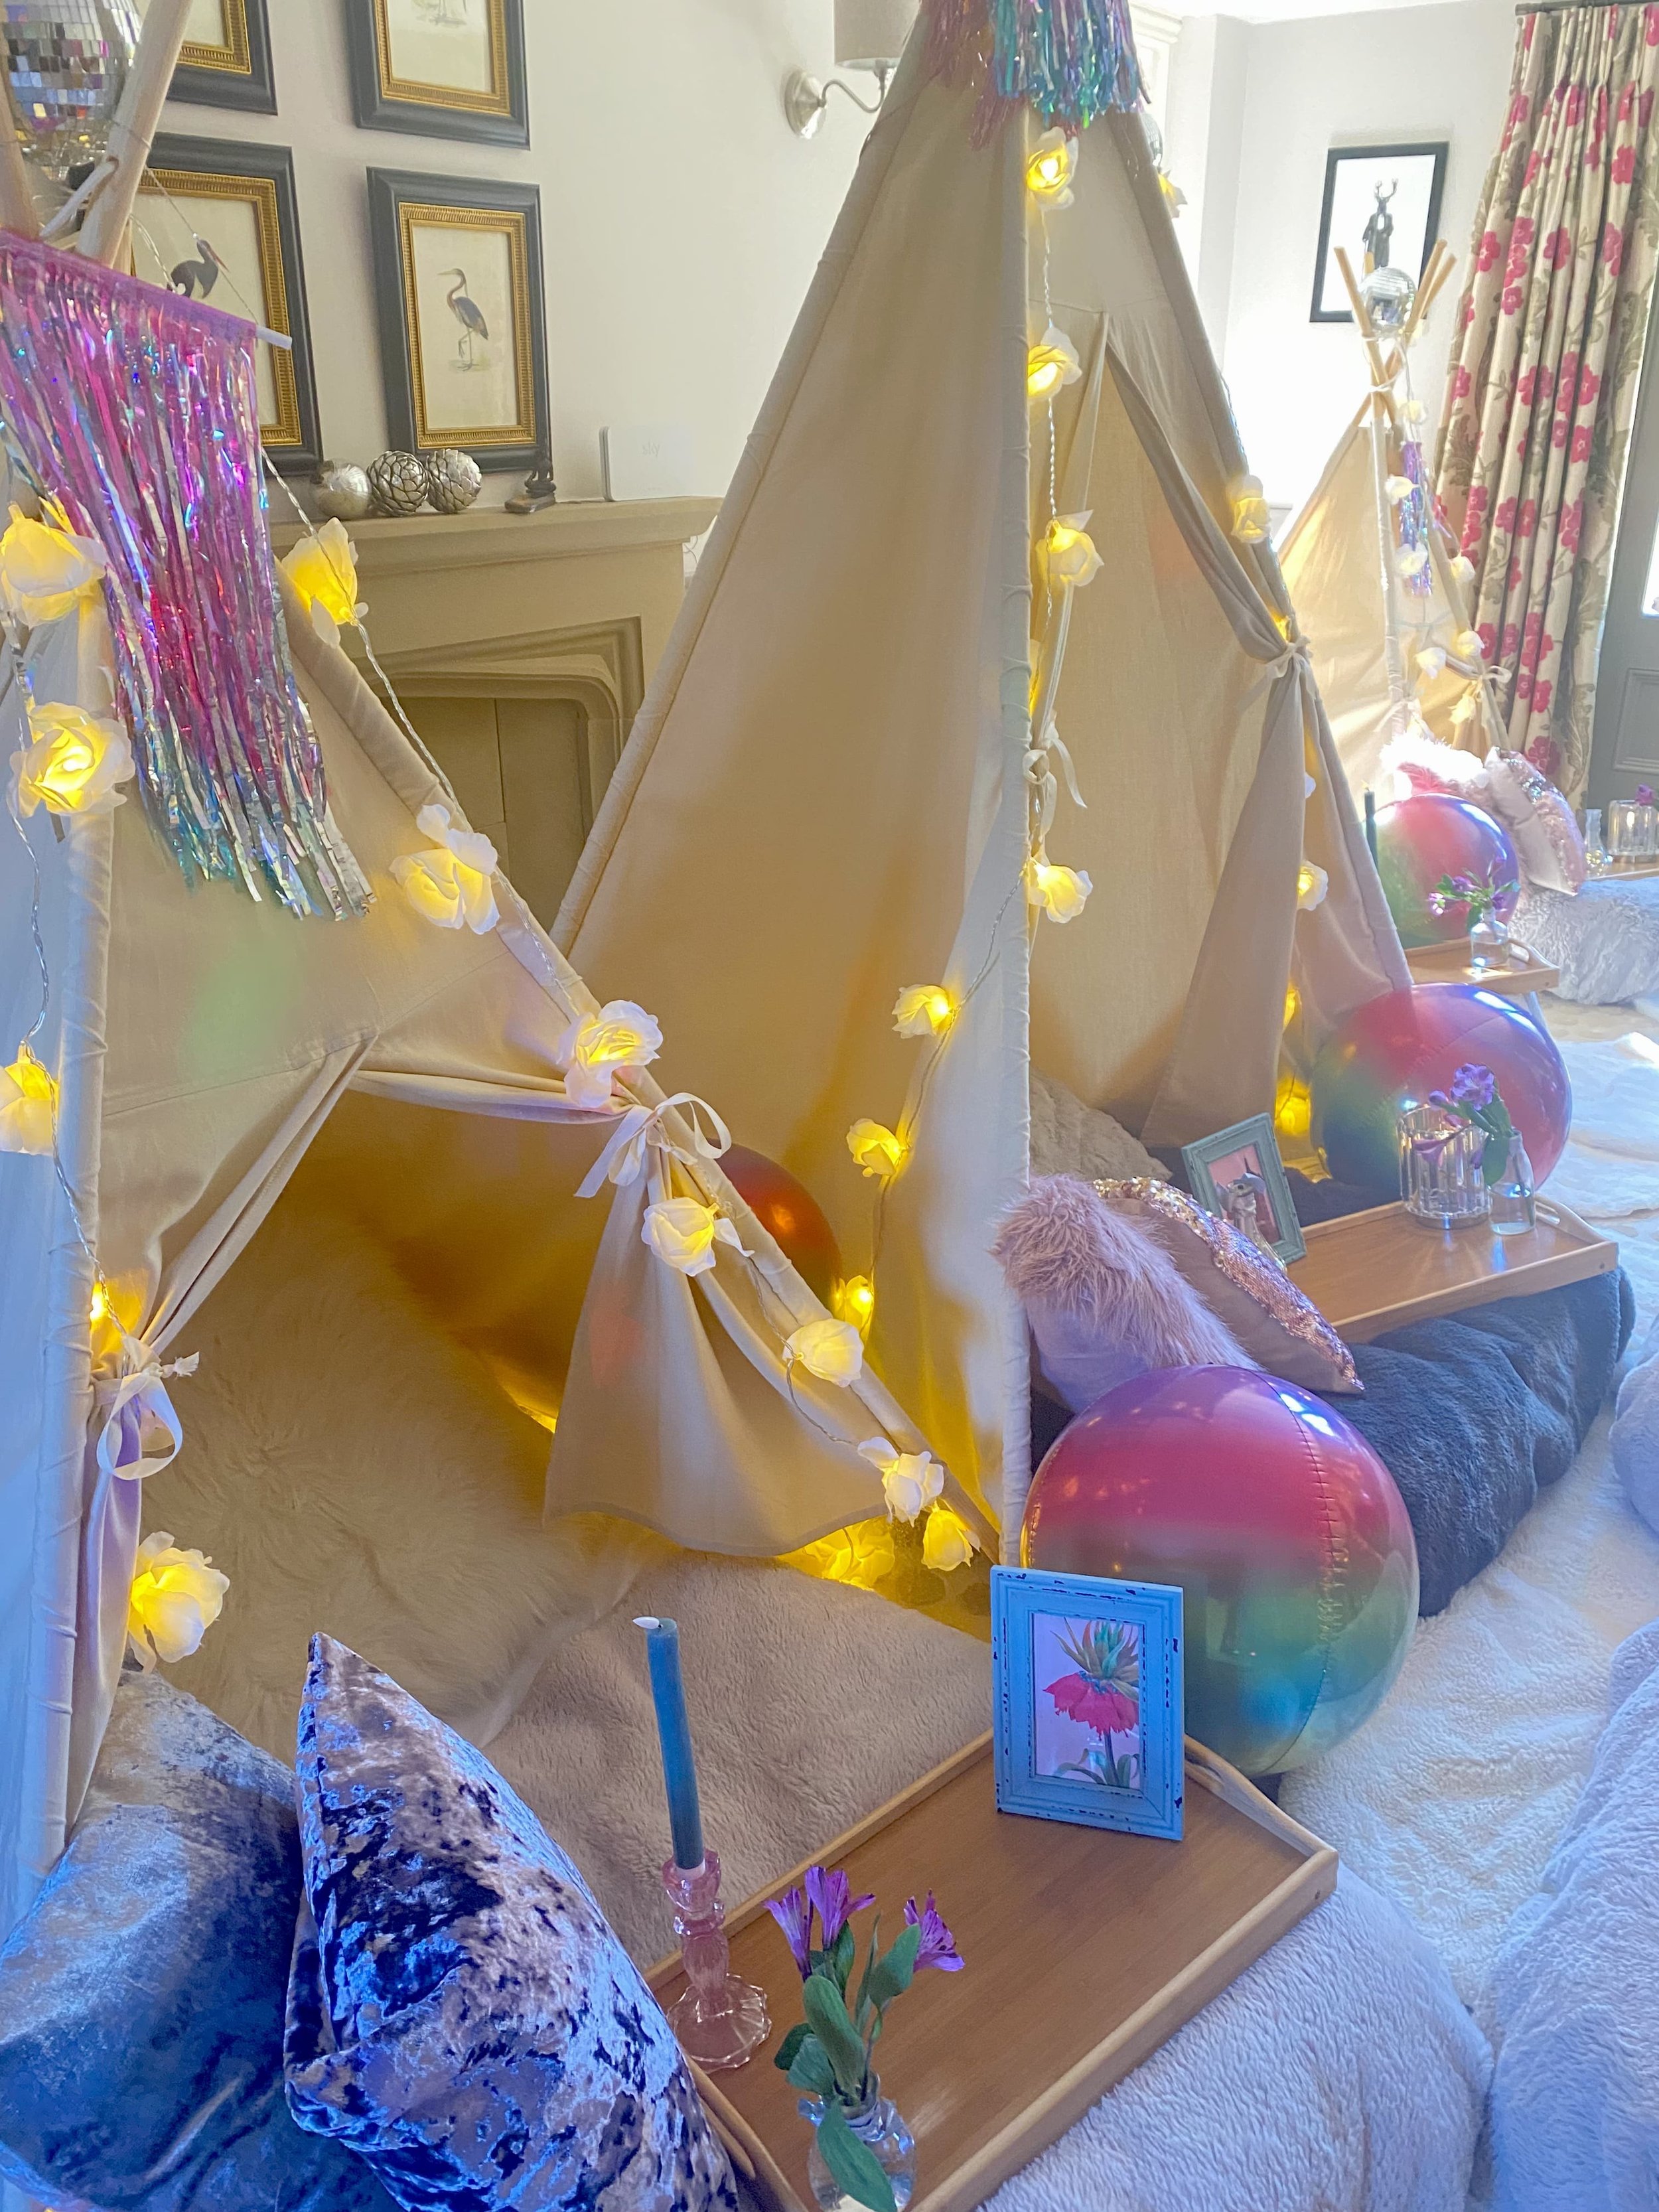 Canvas Belles Sleepovers - Sleepover Party Tents in Warwickshire